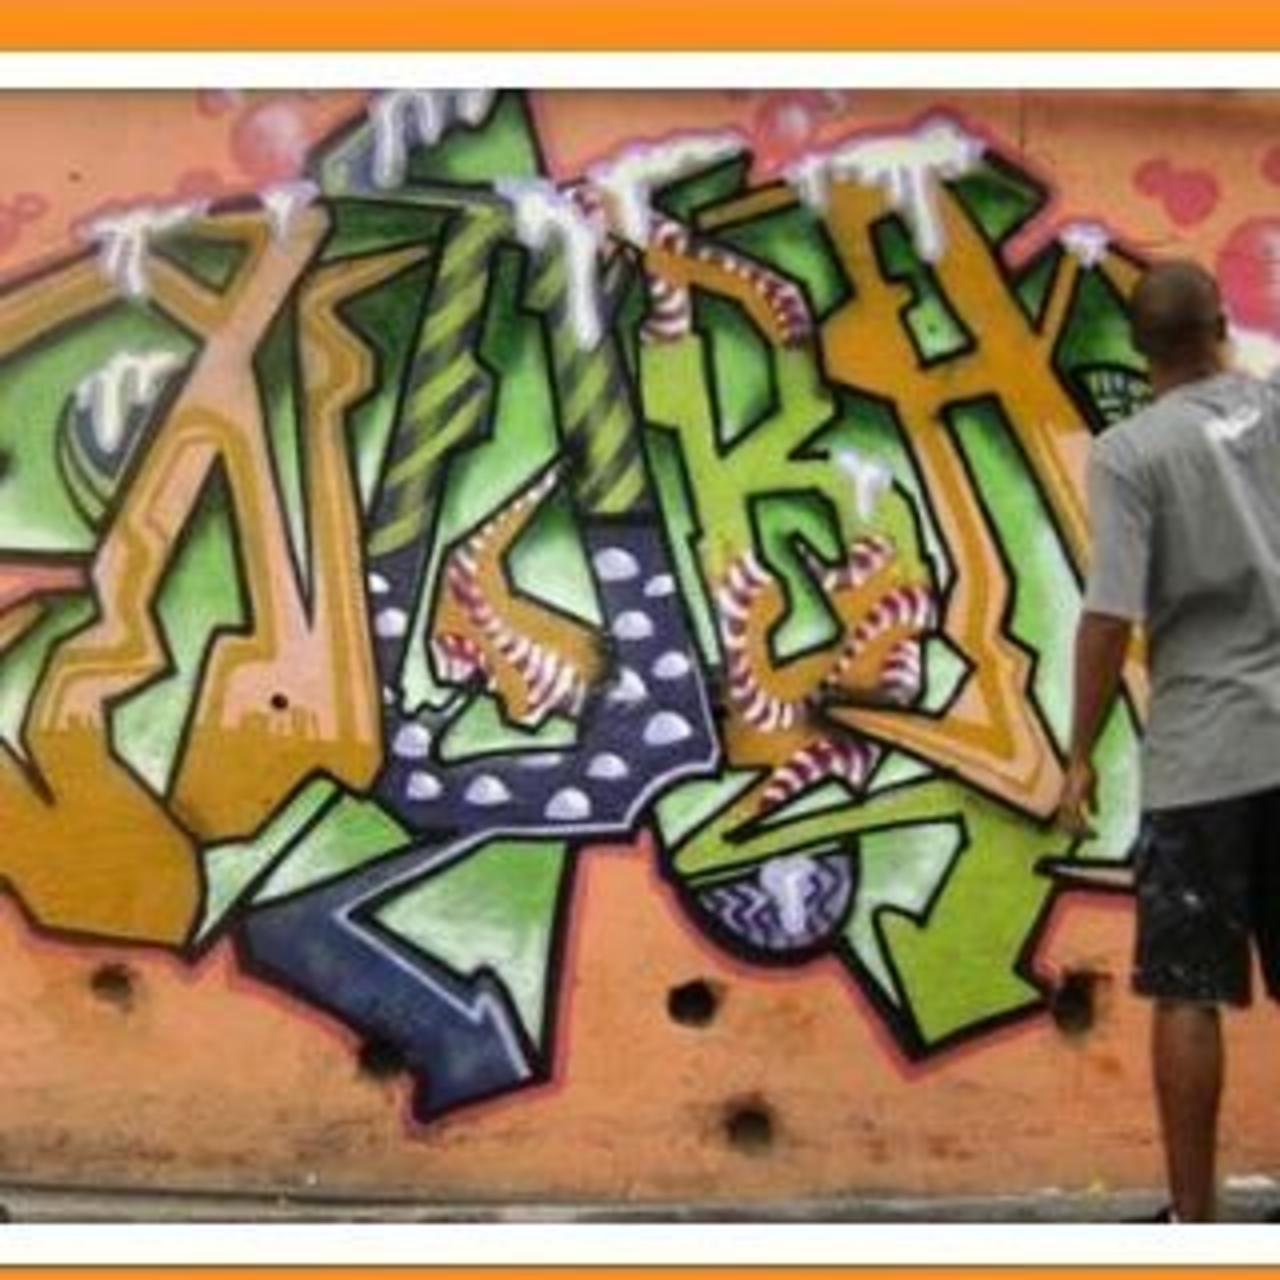 Nobã em ação #graffiti #wildstyle  #artistasurbanoscrew #streetartrio #streetart by artistasurbanoscrew http://t.co/t9ELFKKCh7